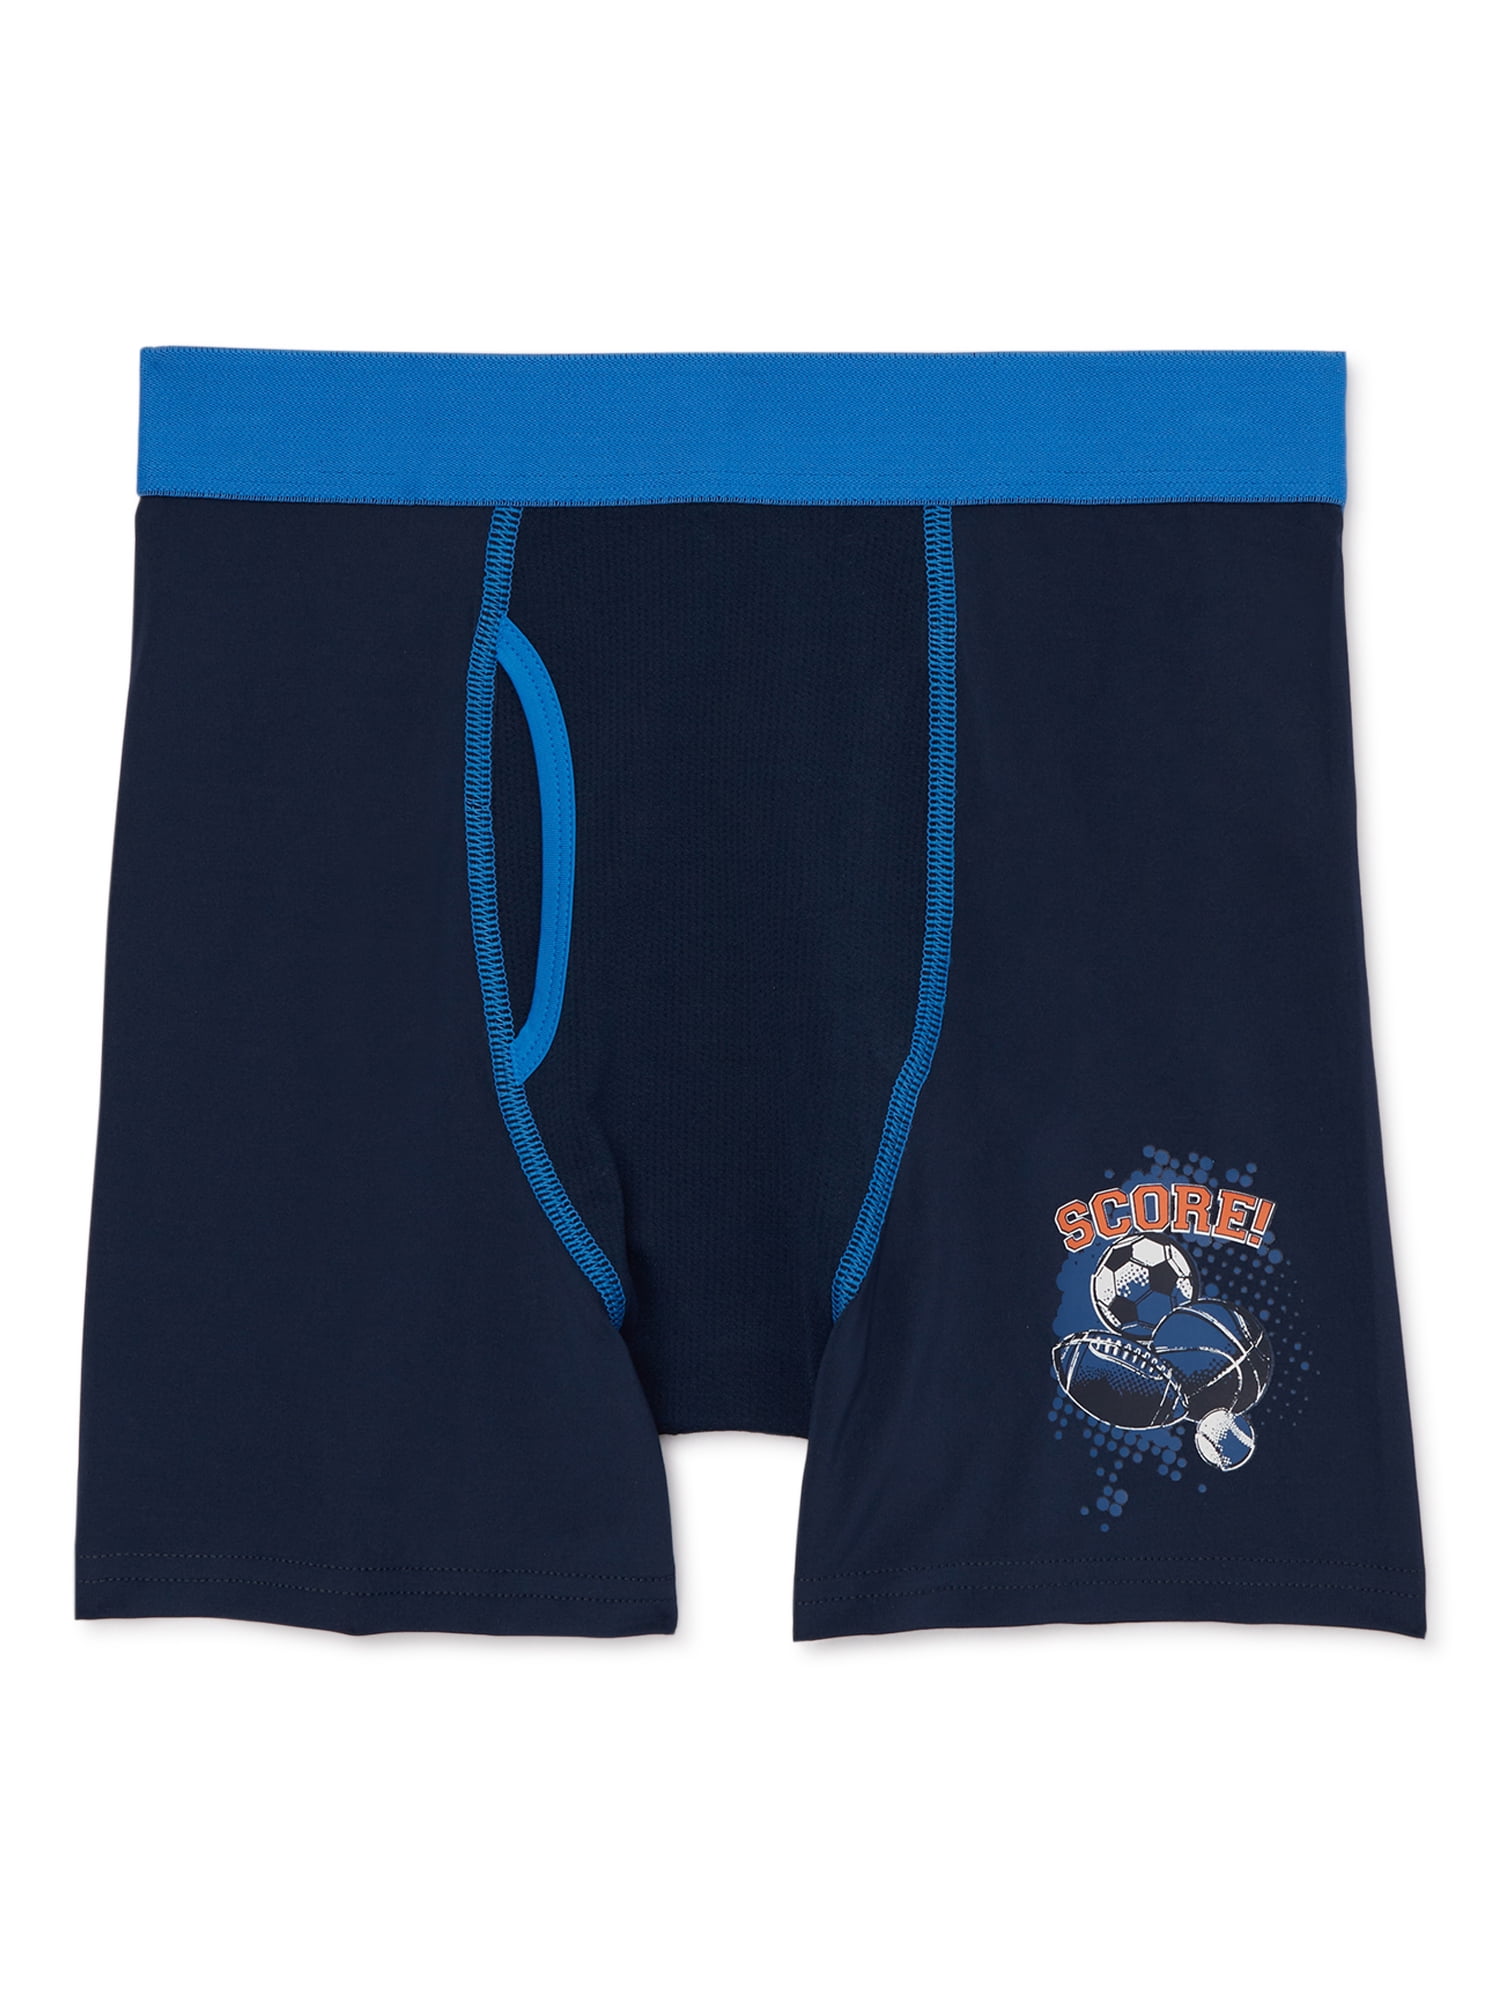 NWOT Athletic Works Boys Medium 4 Pack Boxer Briefs Underwear